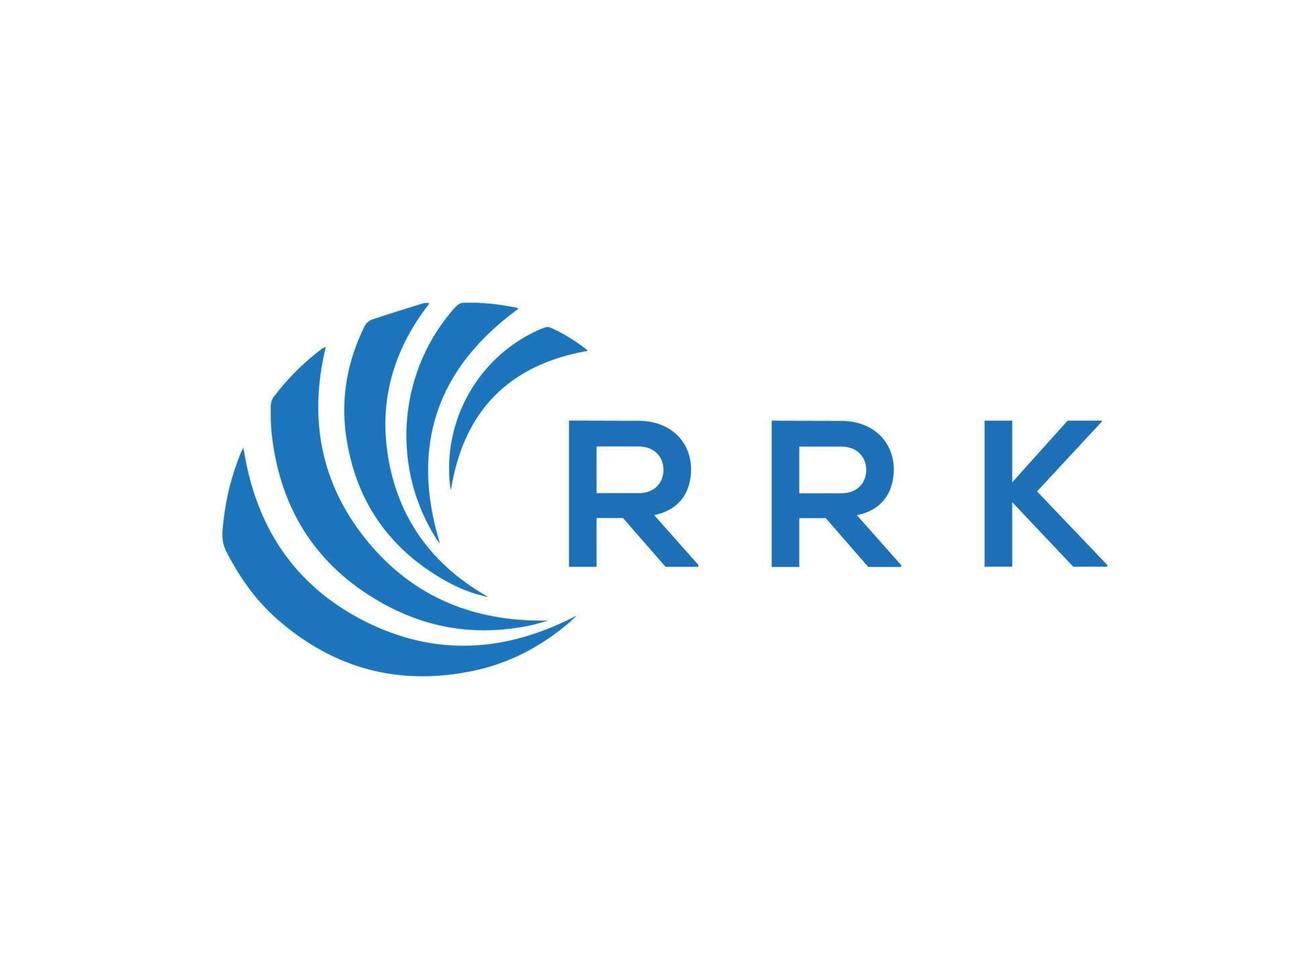 rrk brief logo ontwerp Aan wit achtergrond. rrk creatief cirkel brief logo concept. rrk brief ontwerp. vector